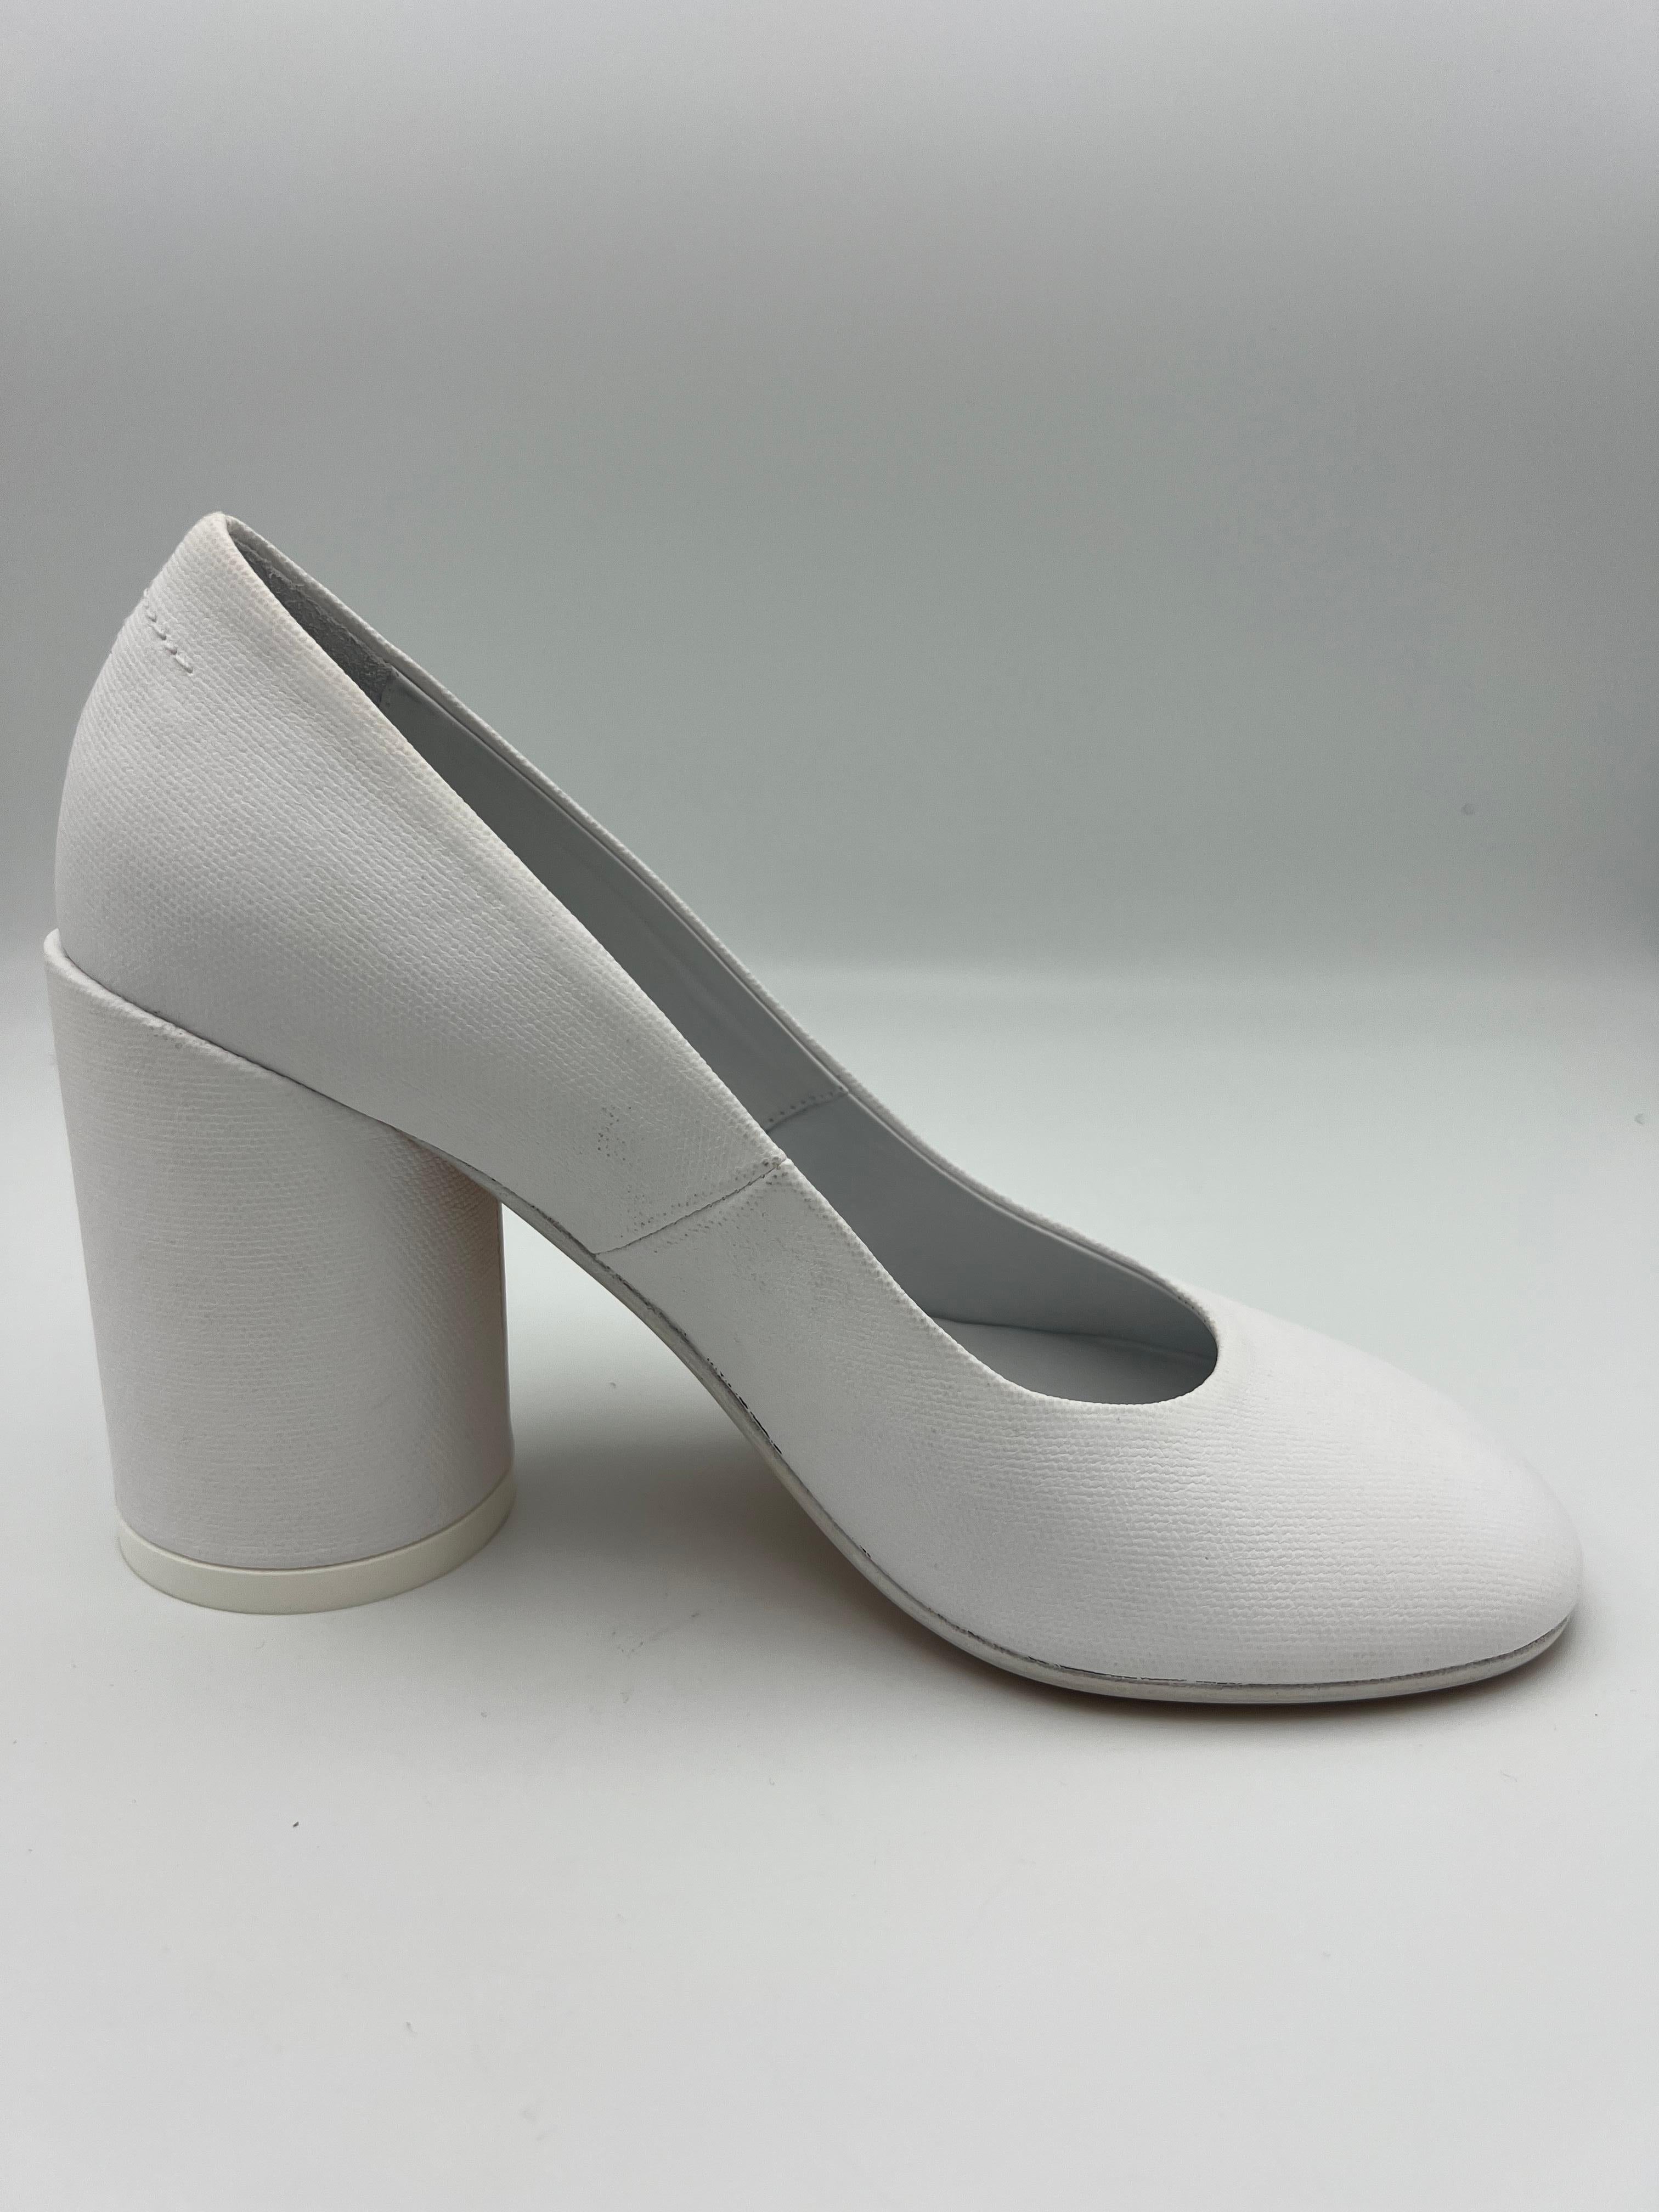 MM6 Maison Margiela White Heel Shoes, Size 38 For Sale 4